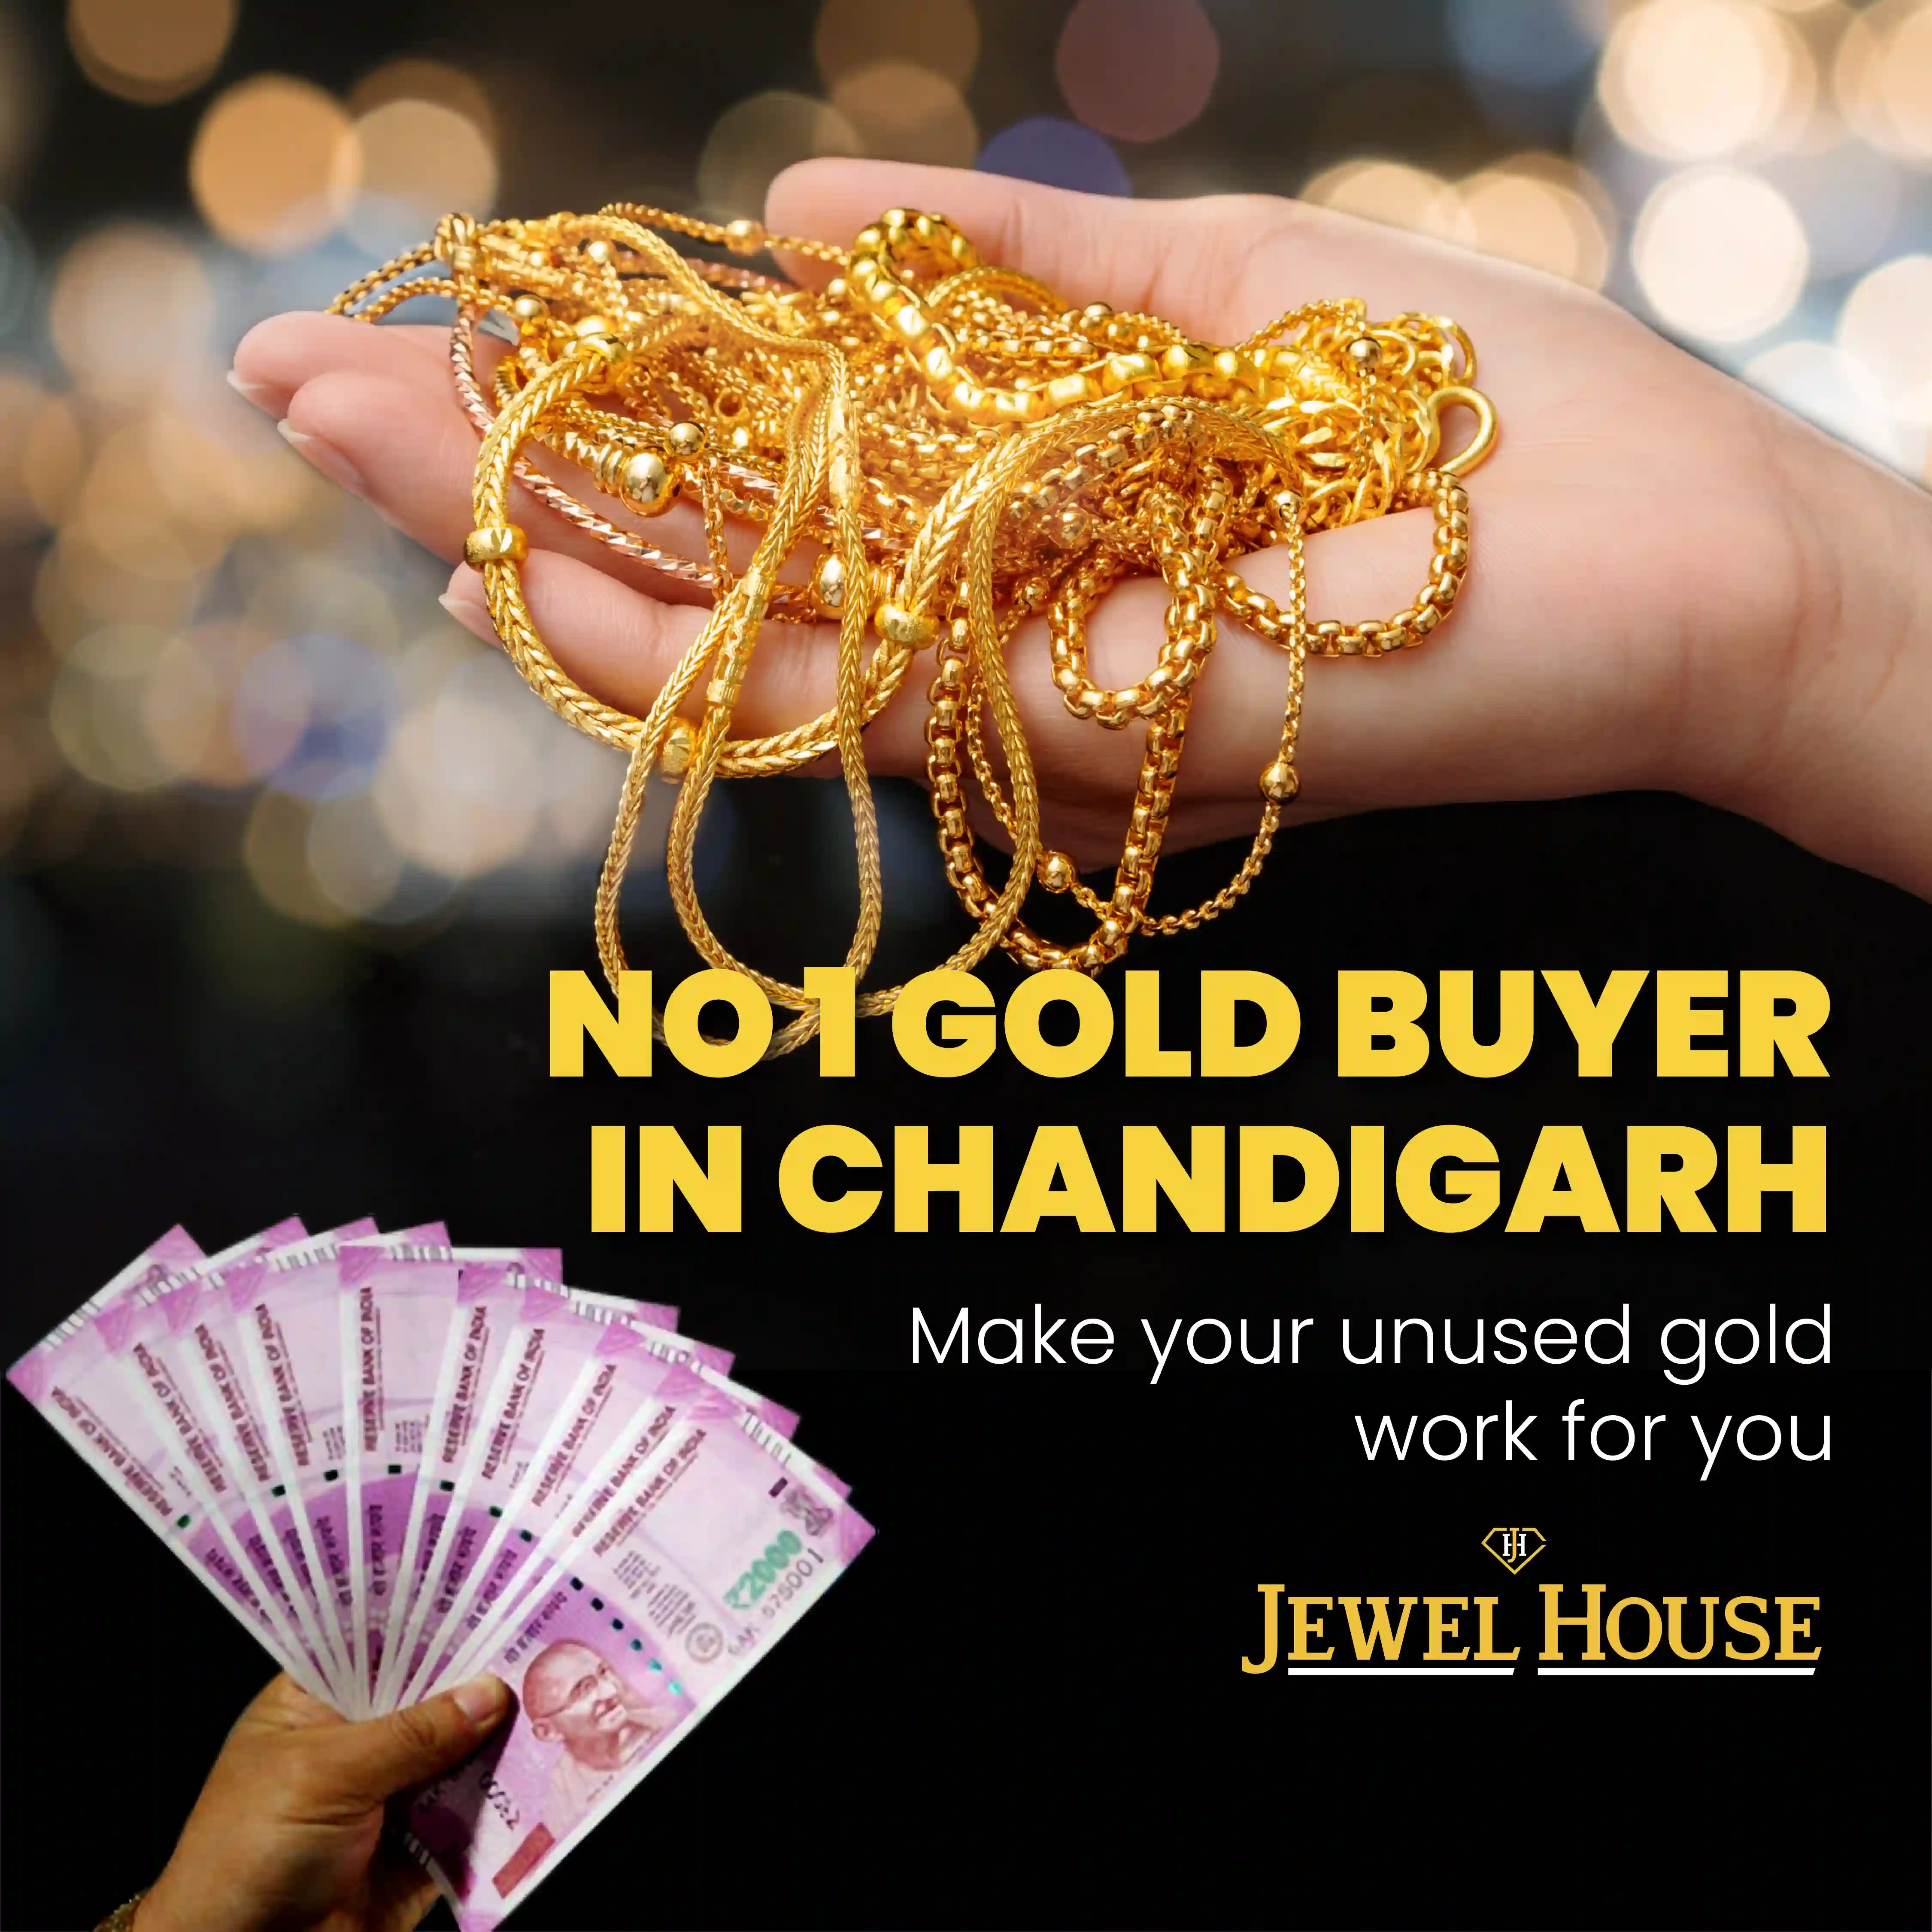 Gold buyer in chandigarh